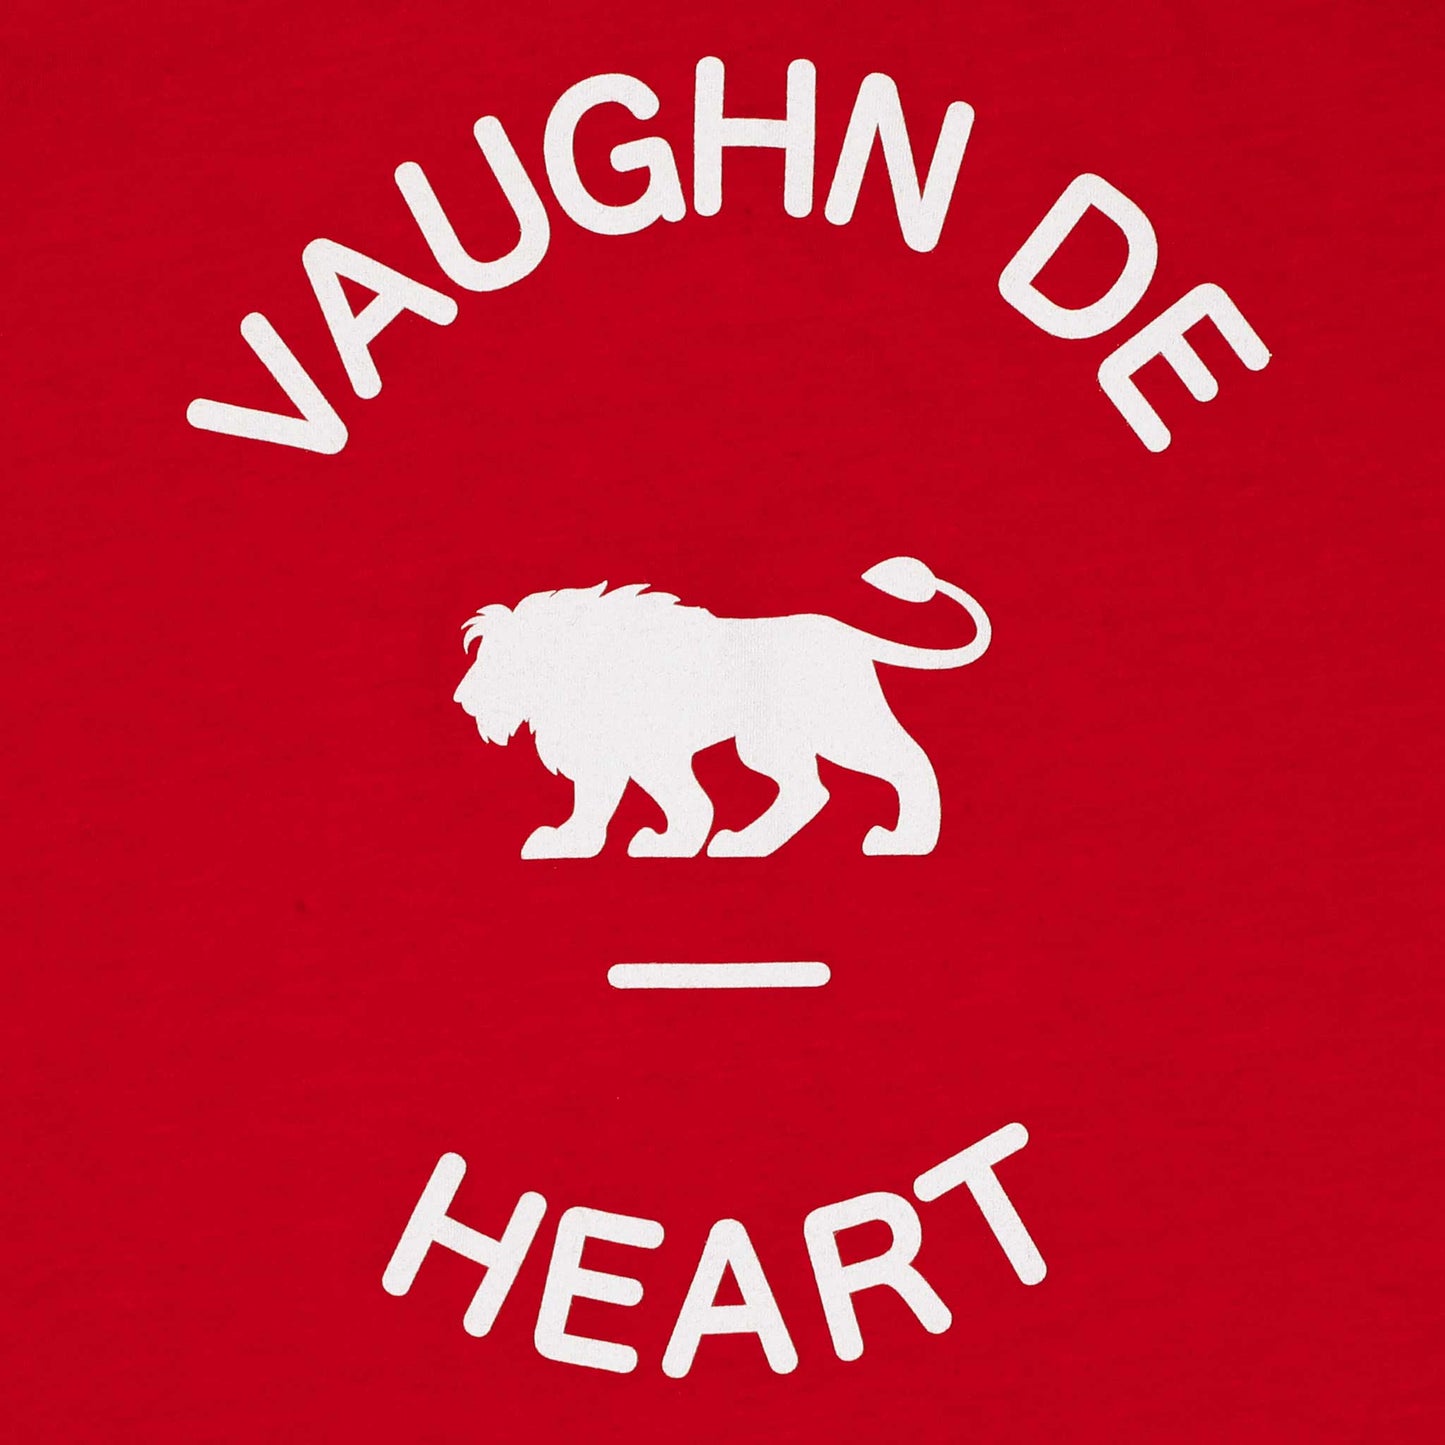 Men's - Circle Lion Red Crew Neck T-Shirt-Vaughn de Heart